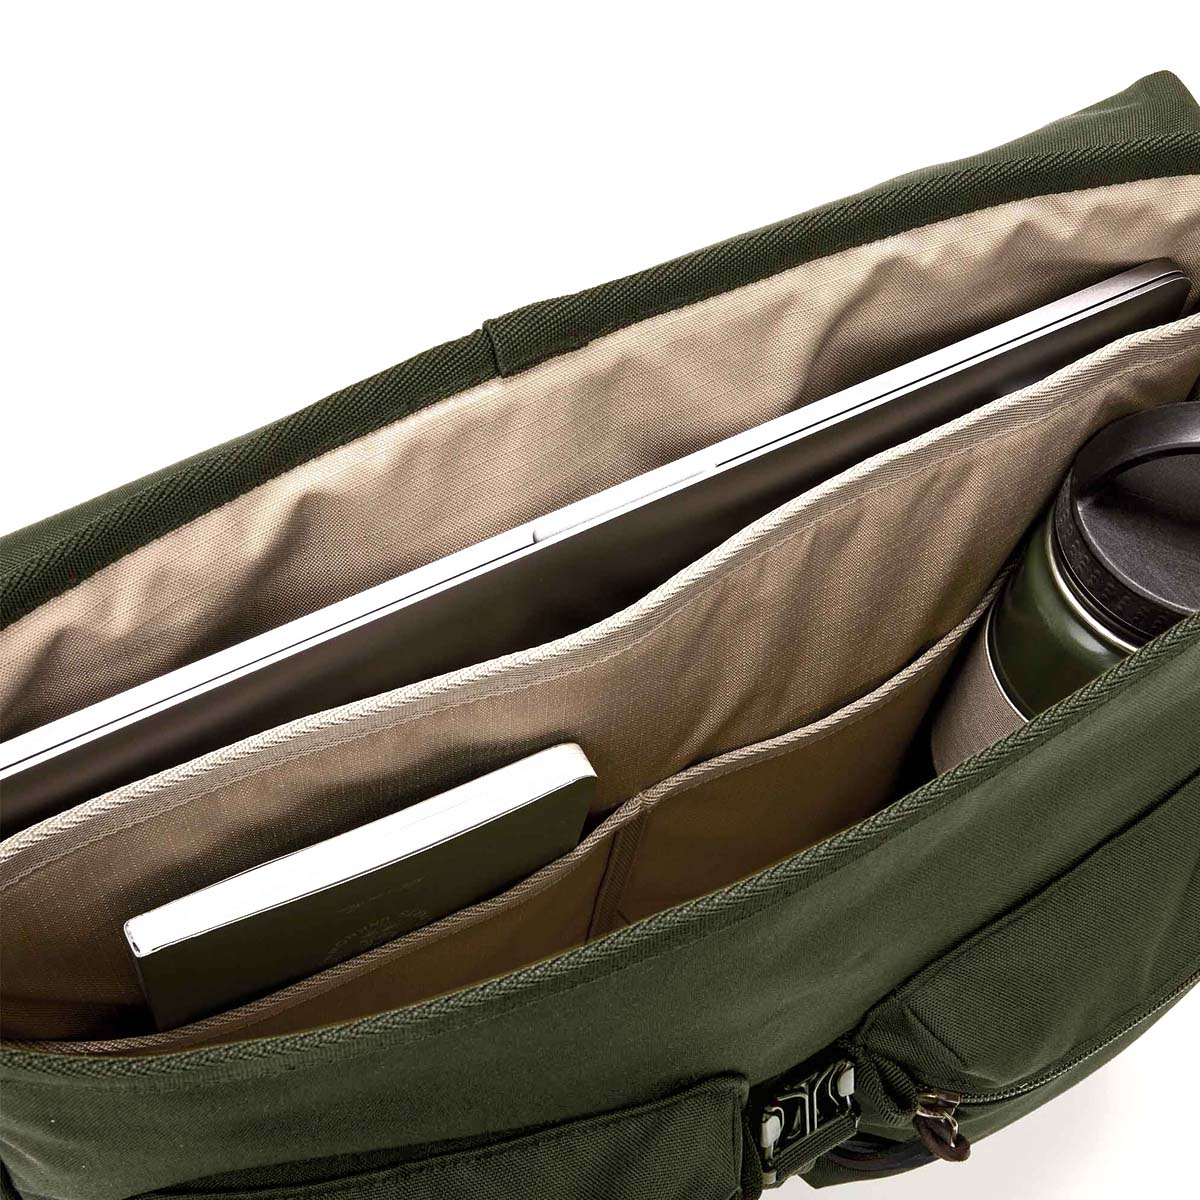 Filson Surveyor Messenger Bag Service Green, features a padded laptop compartment